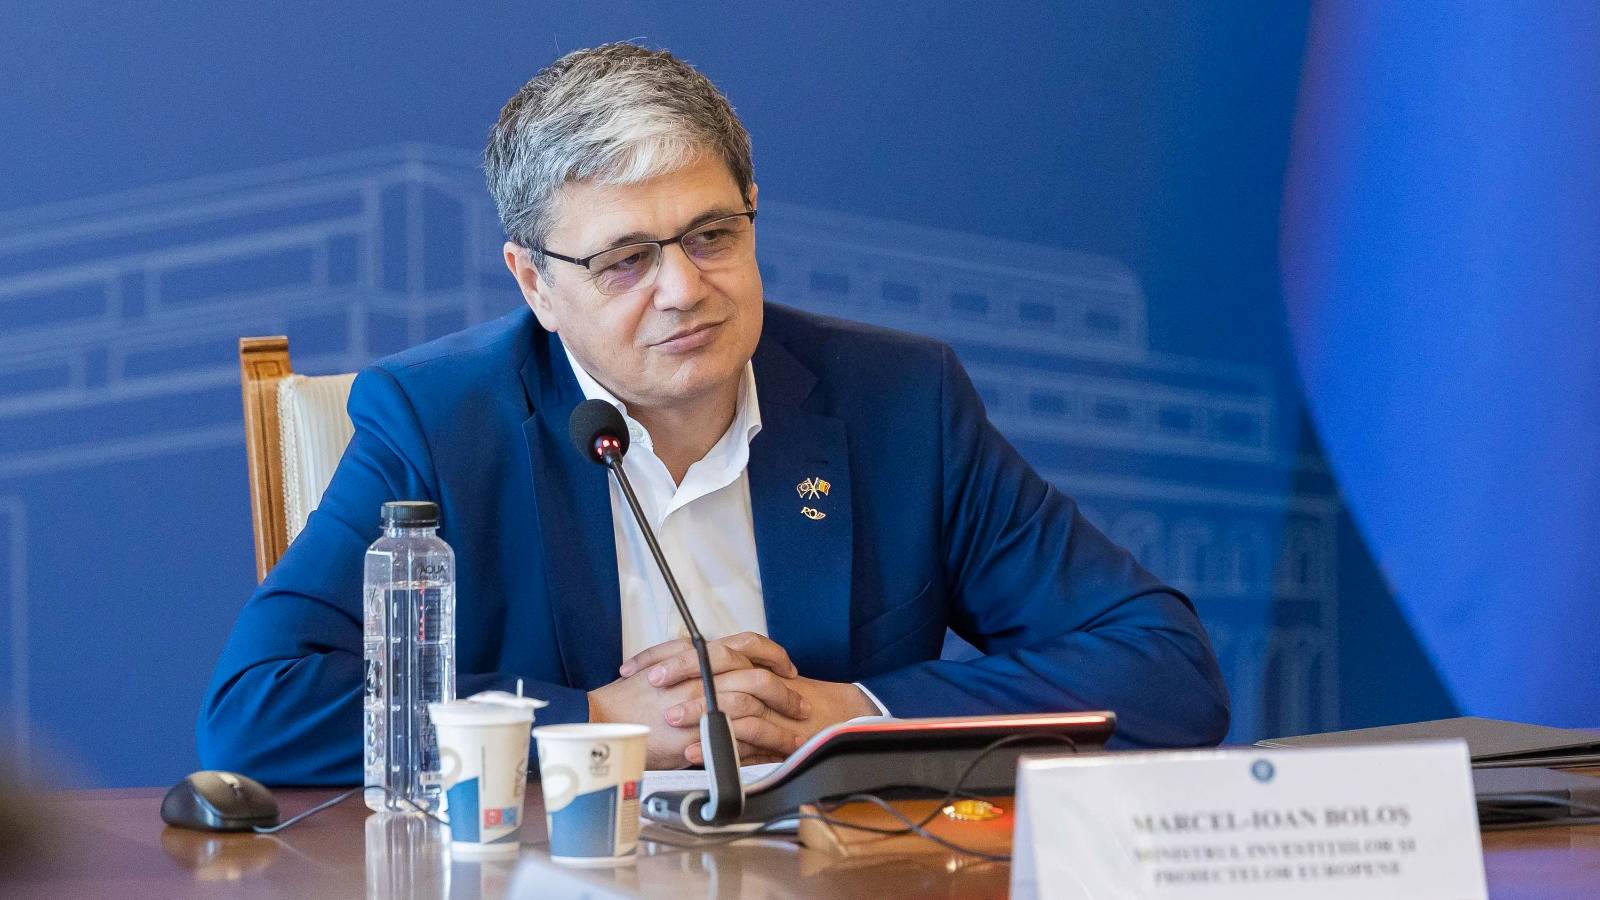 Marcel Bolos Anunta 2 Masuri Importante Ministerului Finantelor Toata Romania